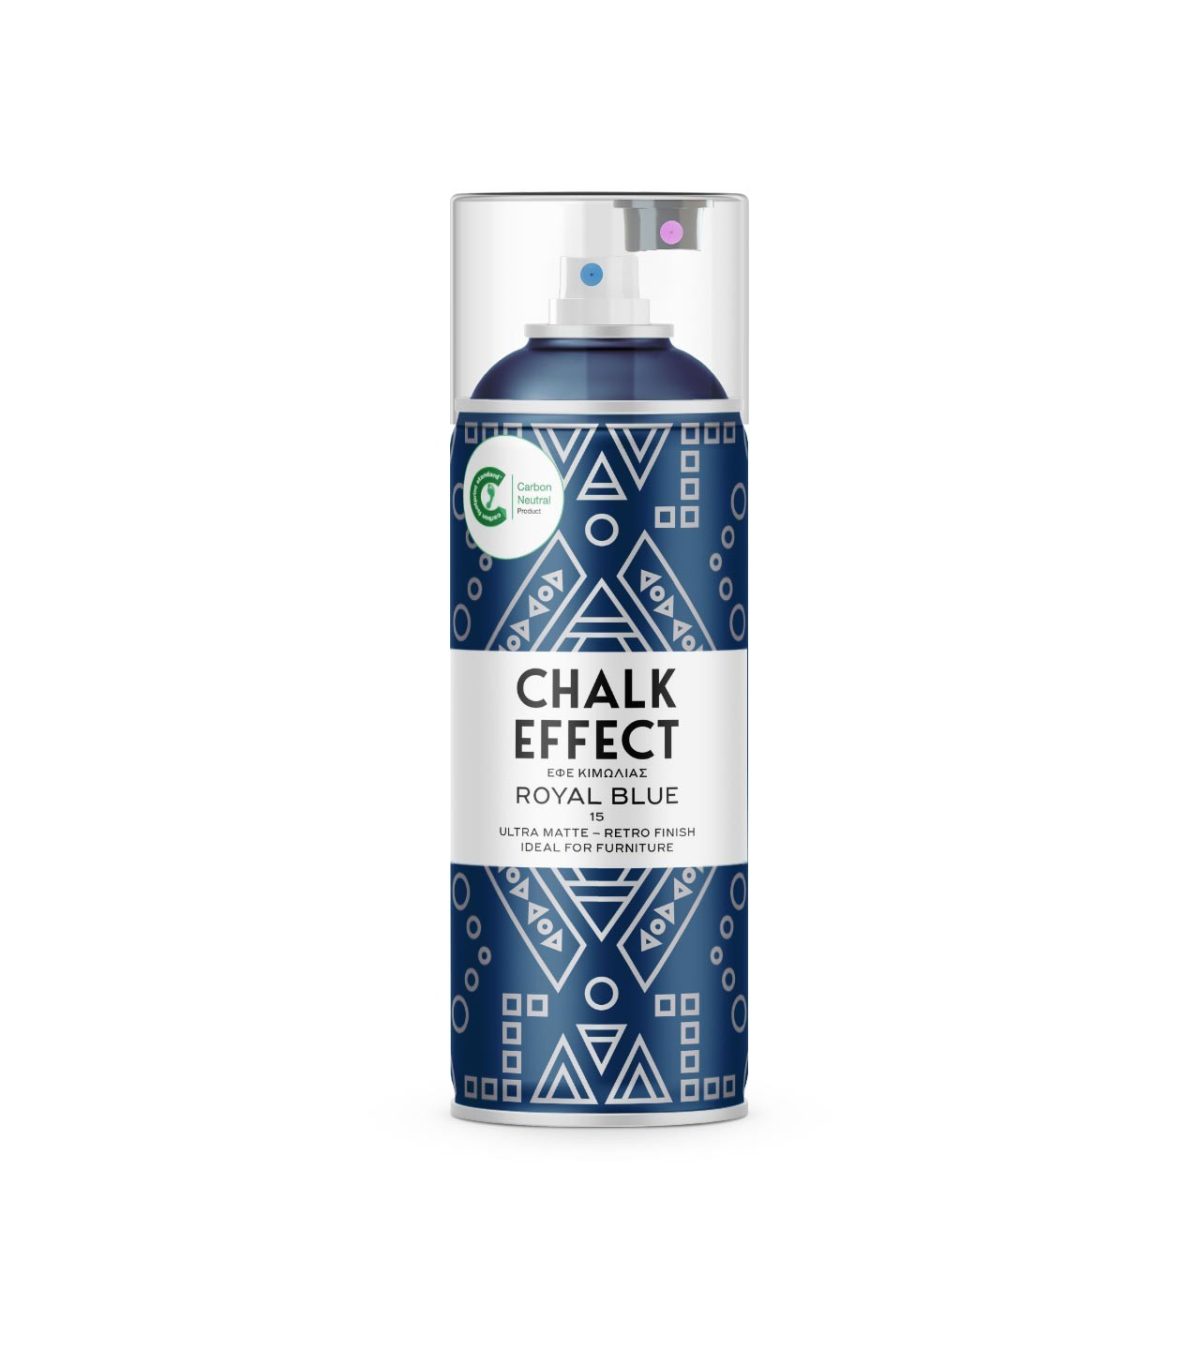 chalk-effect-royal-blue-cosmos-lac-aerosol-spray-paint-acrylic-diy-upscale-wood-decor-interior-exterior-inhouse-design-decorativ-1280x1440-crop